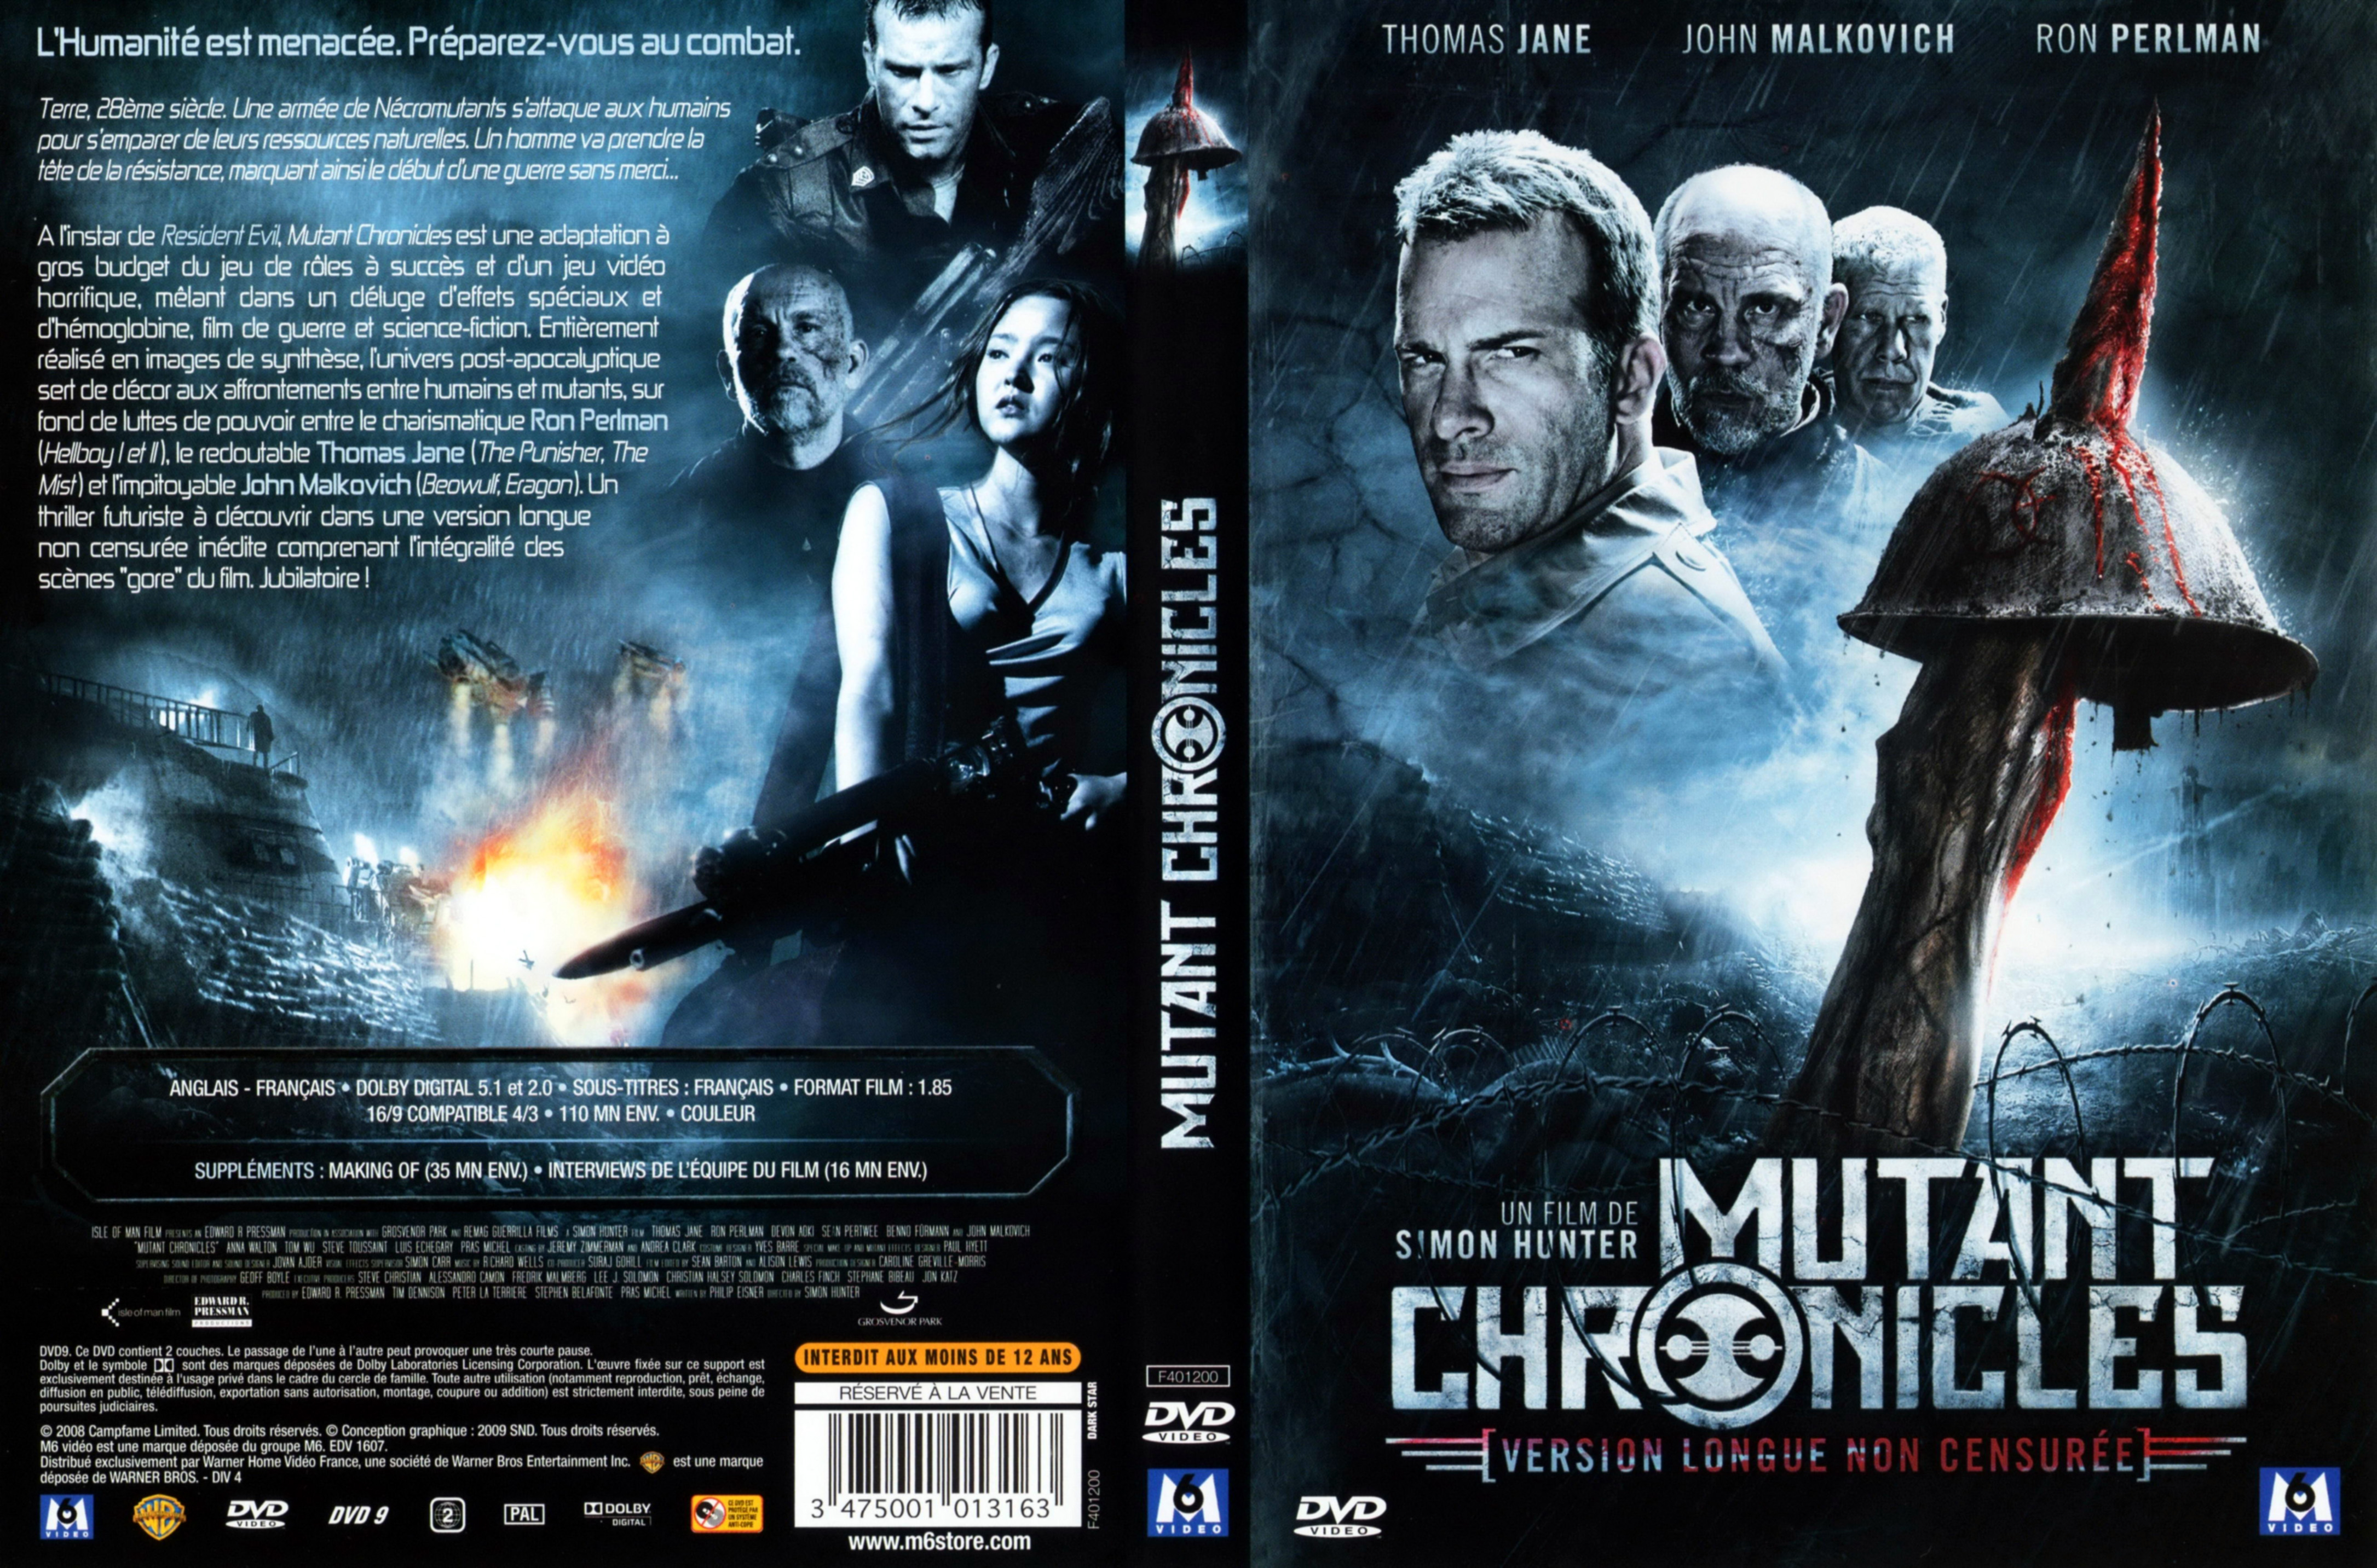 Jaquette DVD Mutant chronicles